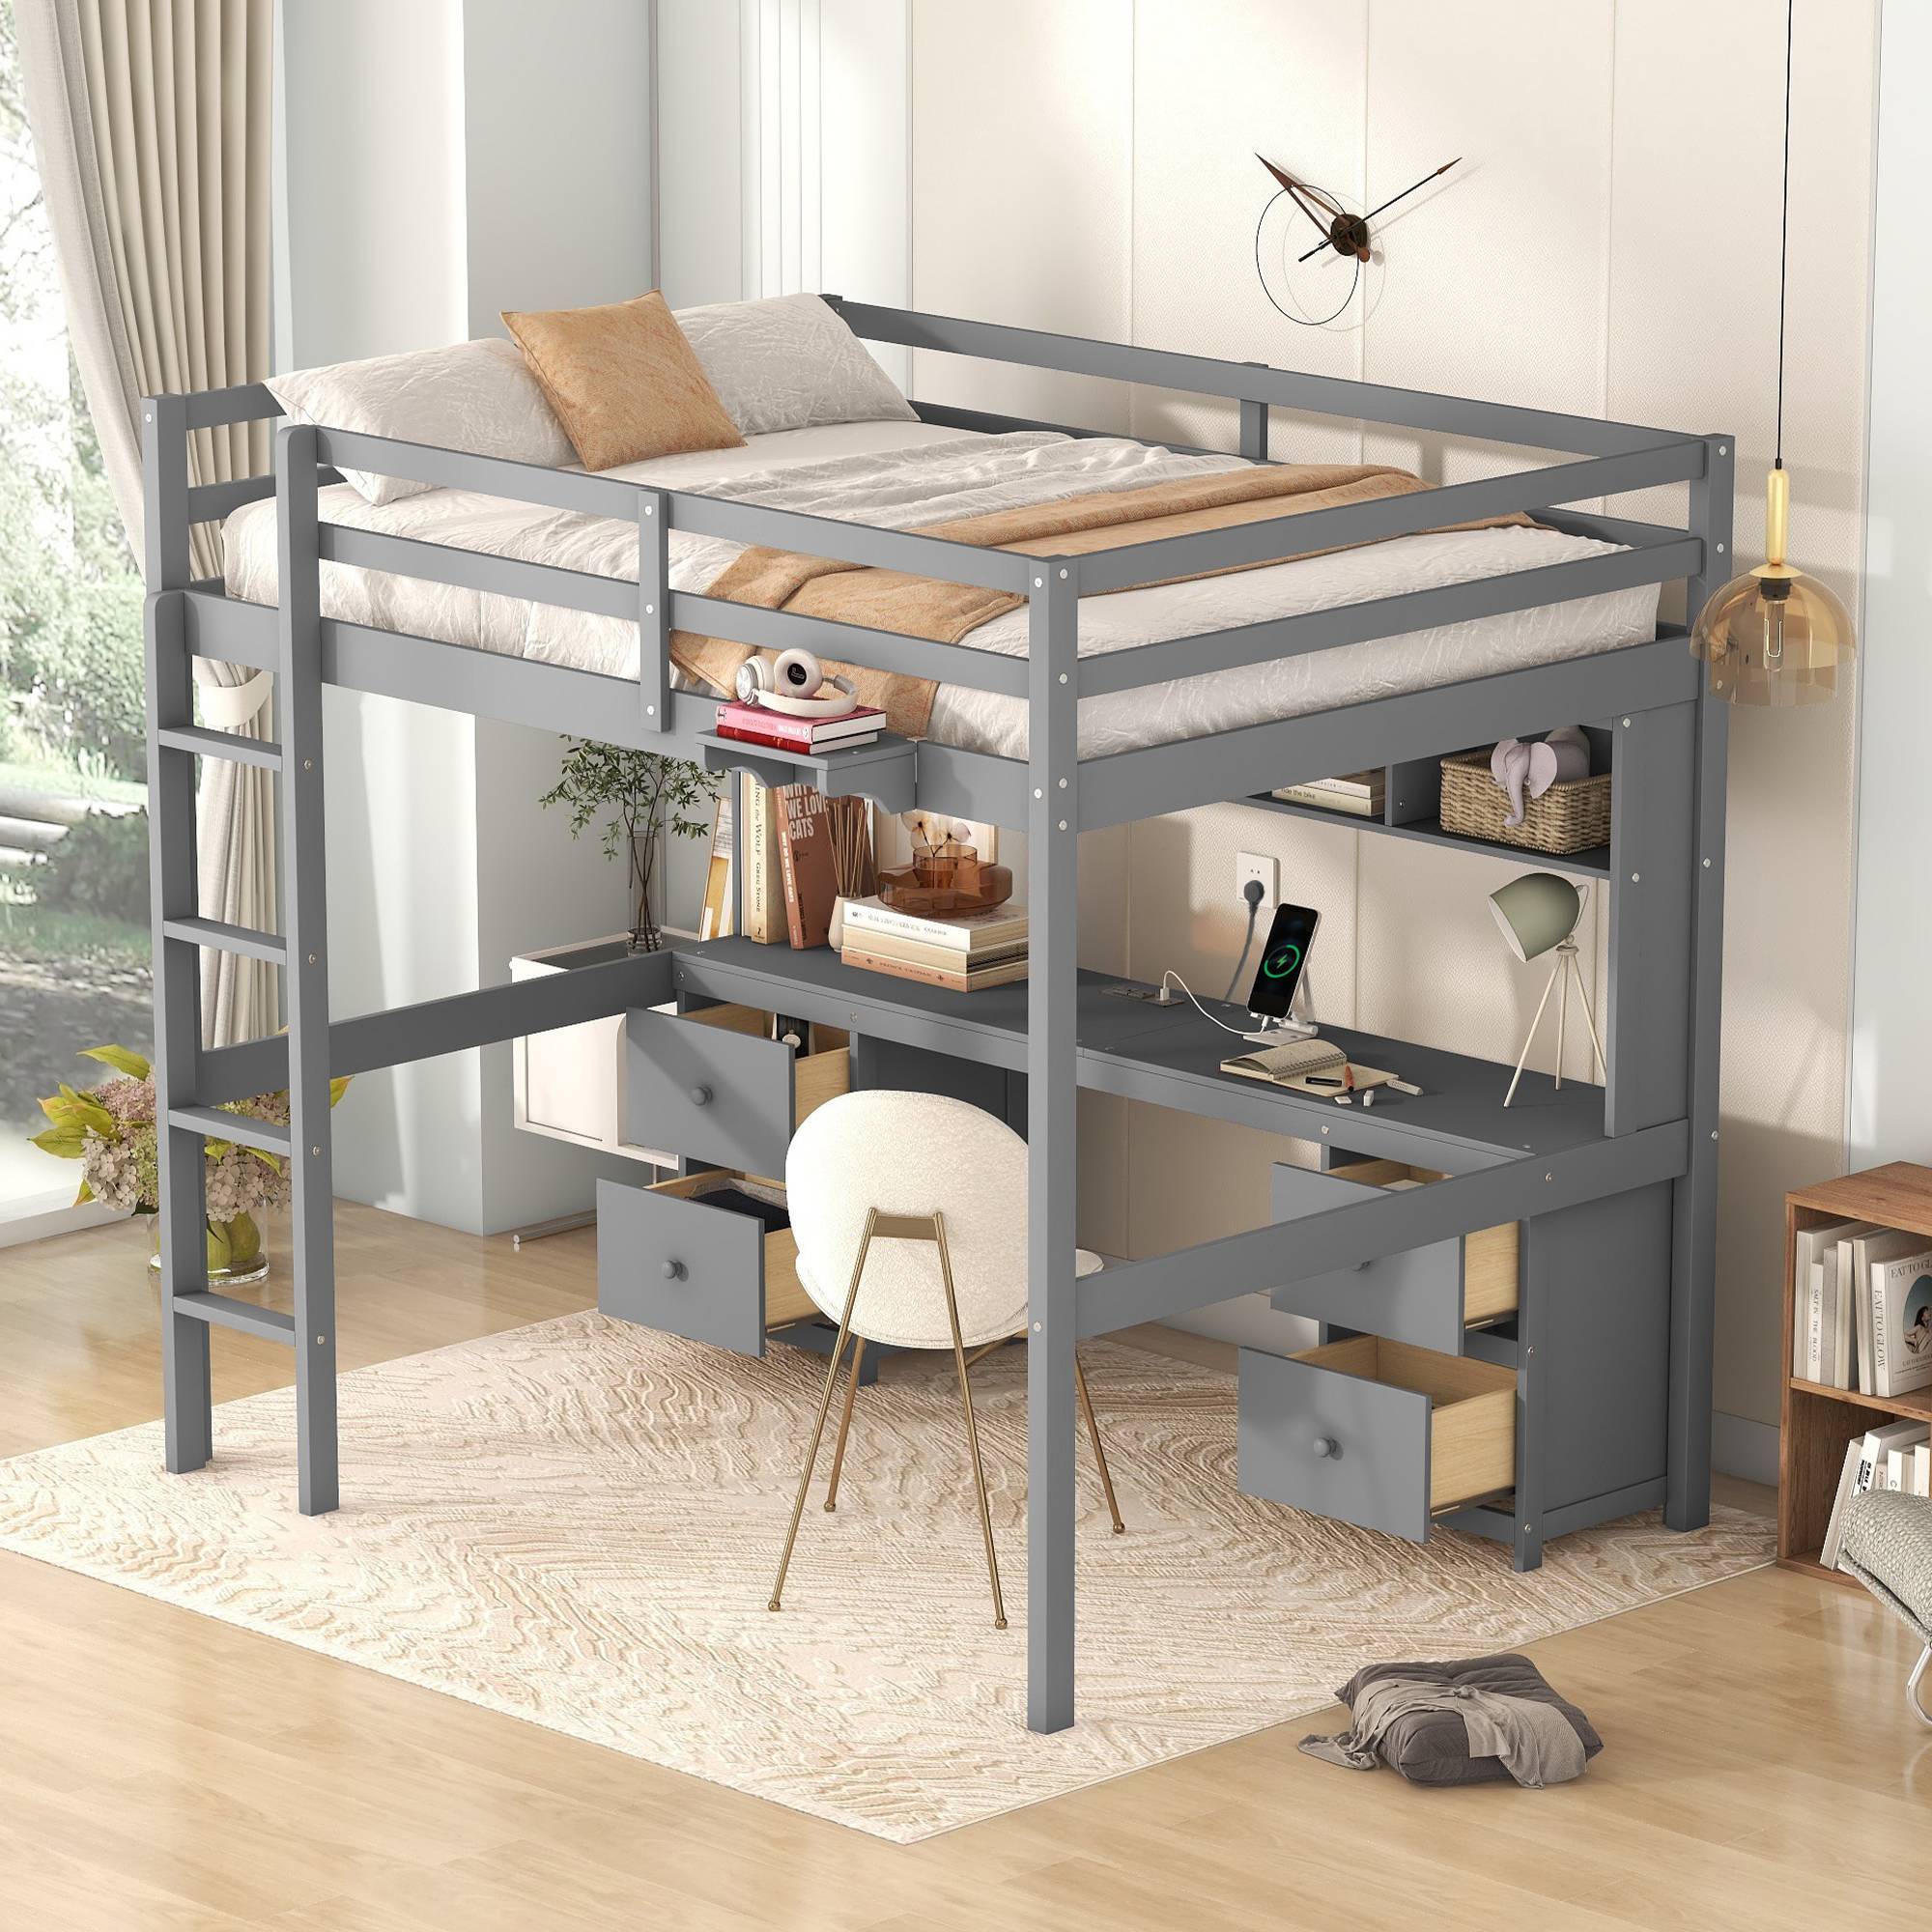 Yiekholo Full Study Loft Bed with Desk and Storage, Grey Finish ...